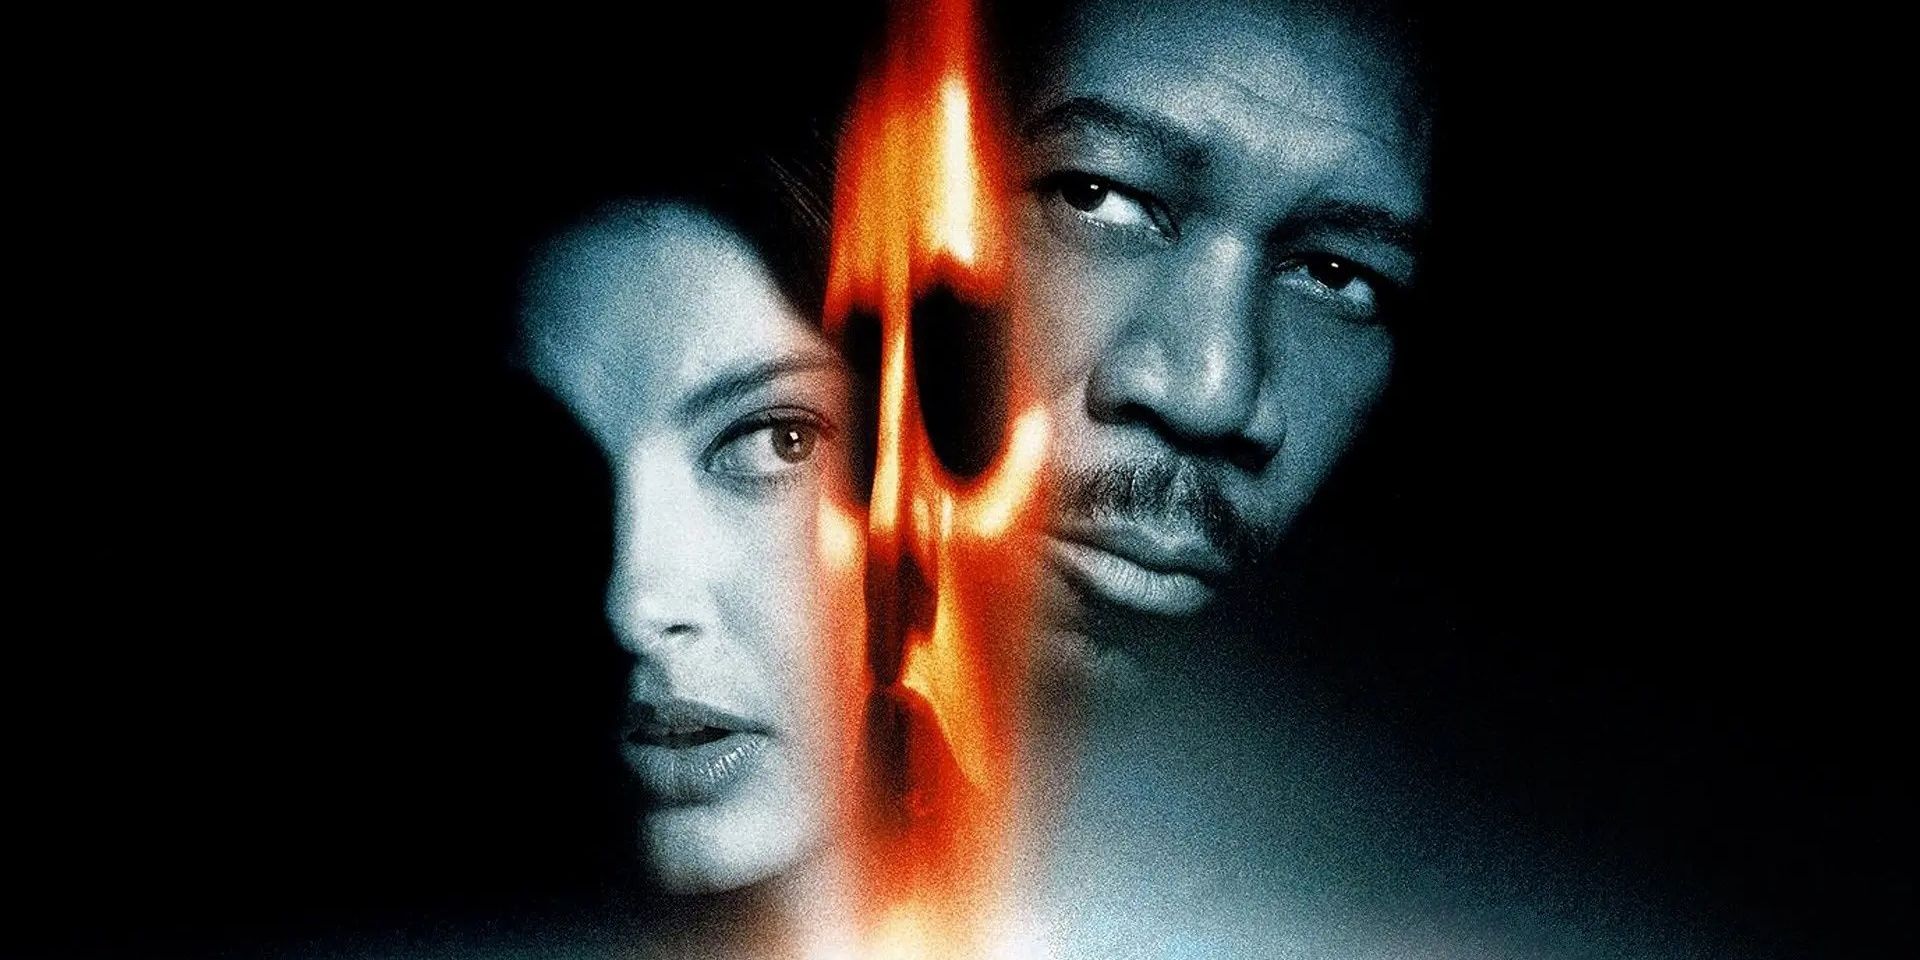 A flame between Morgan Freeman and Ashley Judd's heads